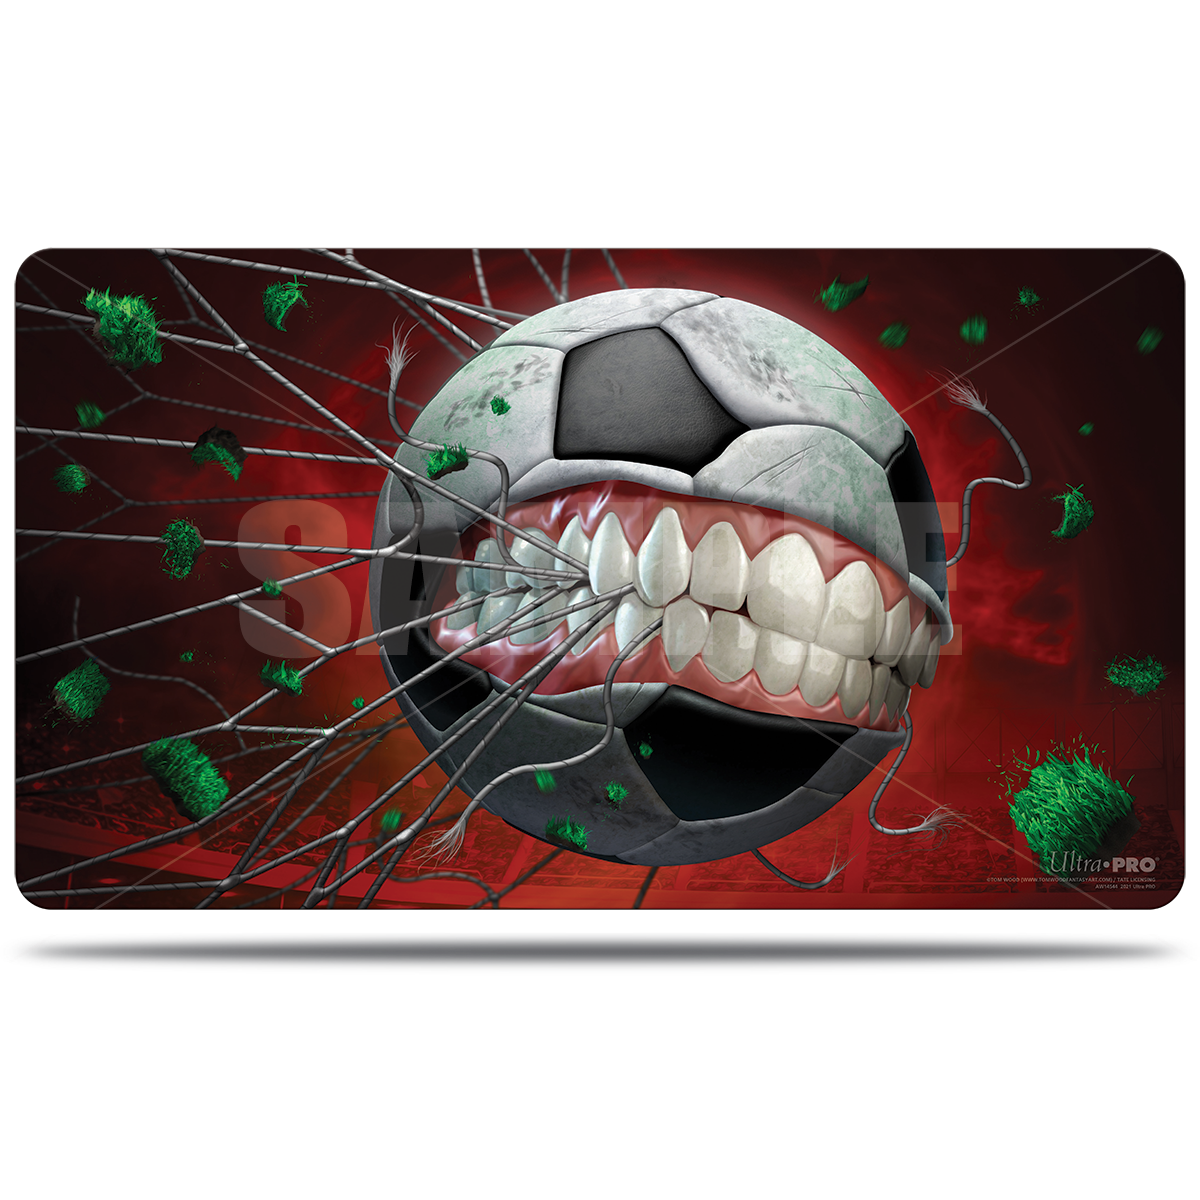 Ultra PRO: Breaker Mat - Tom Wood Monster (Football / Soccer) | Red Riot Games CA